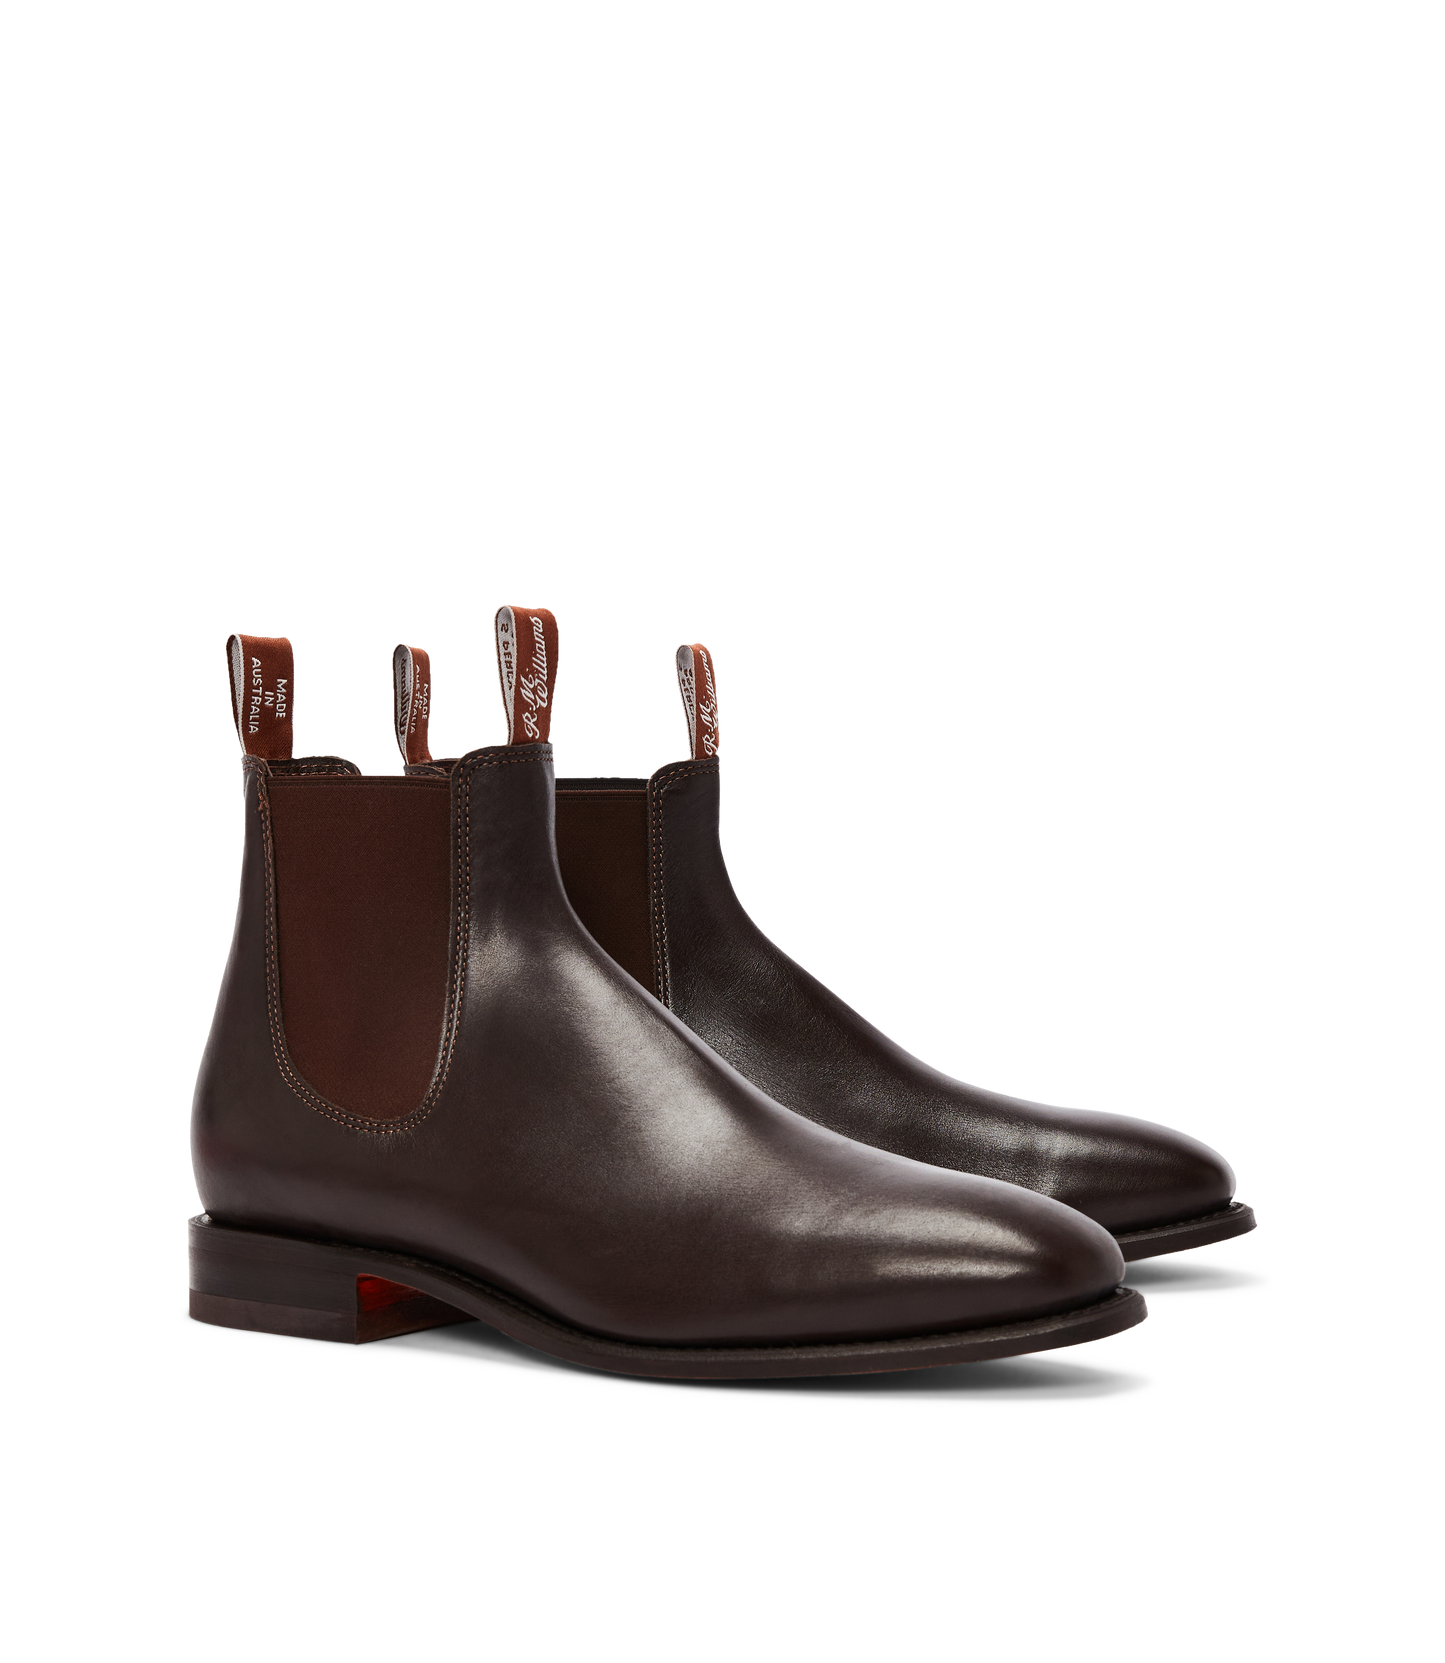 Craftsman boot - Kangaroo leather - Chestnut